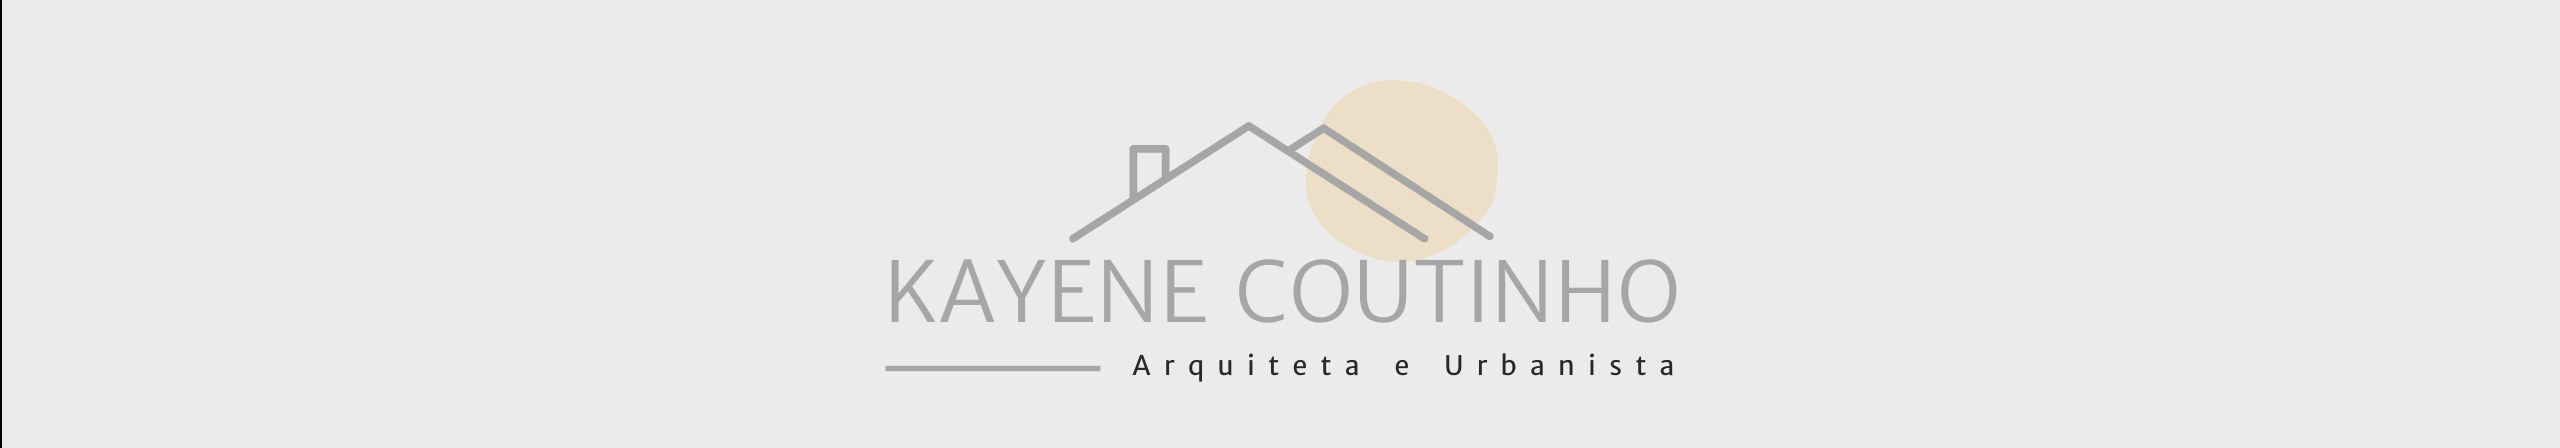 Kayene Coutinho's profile banner